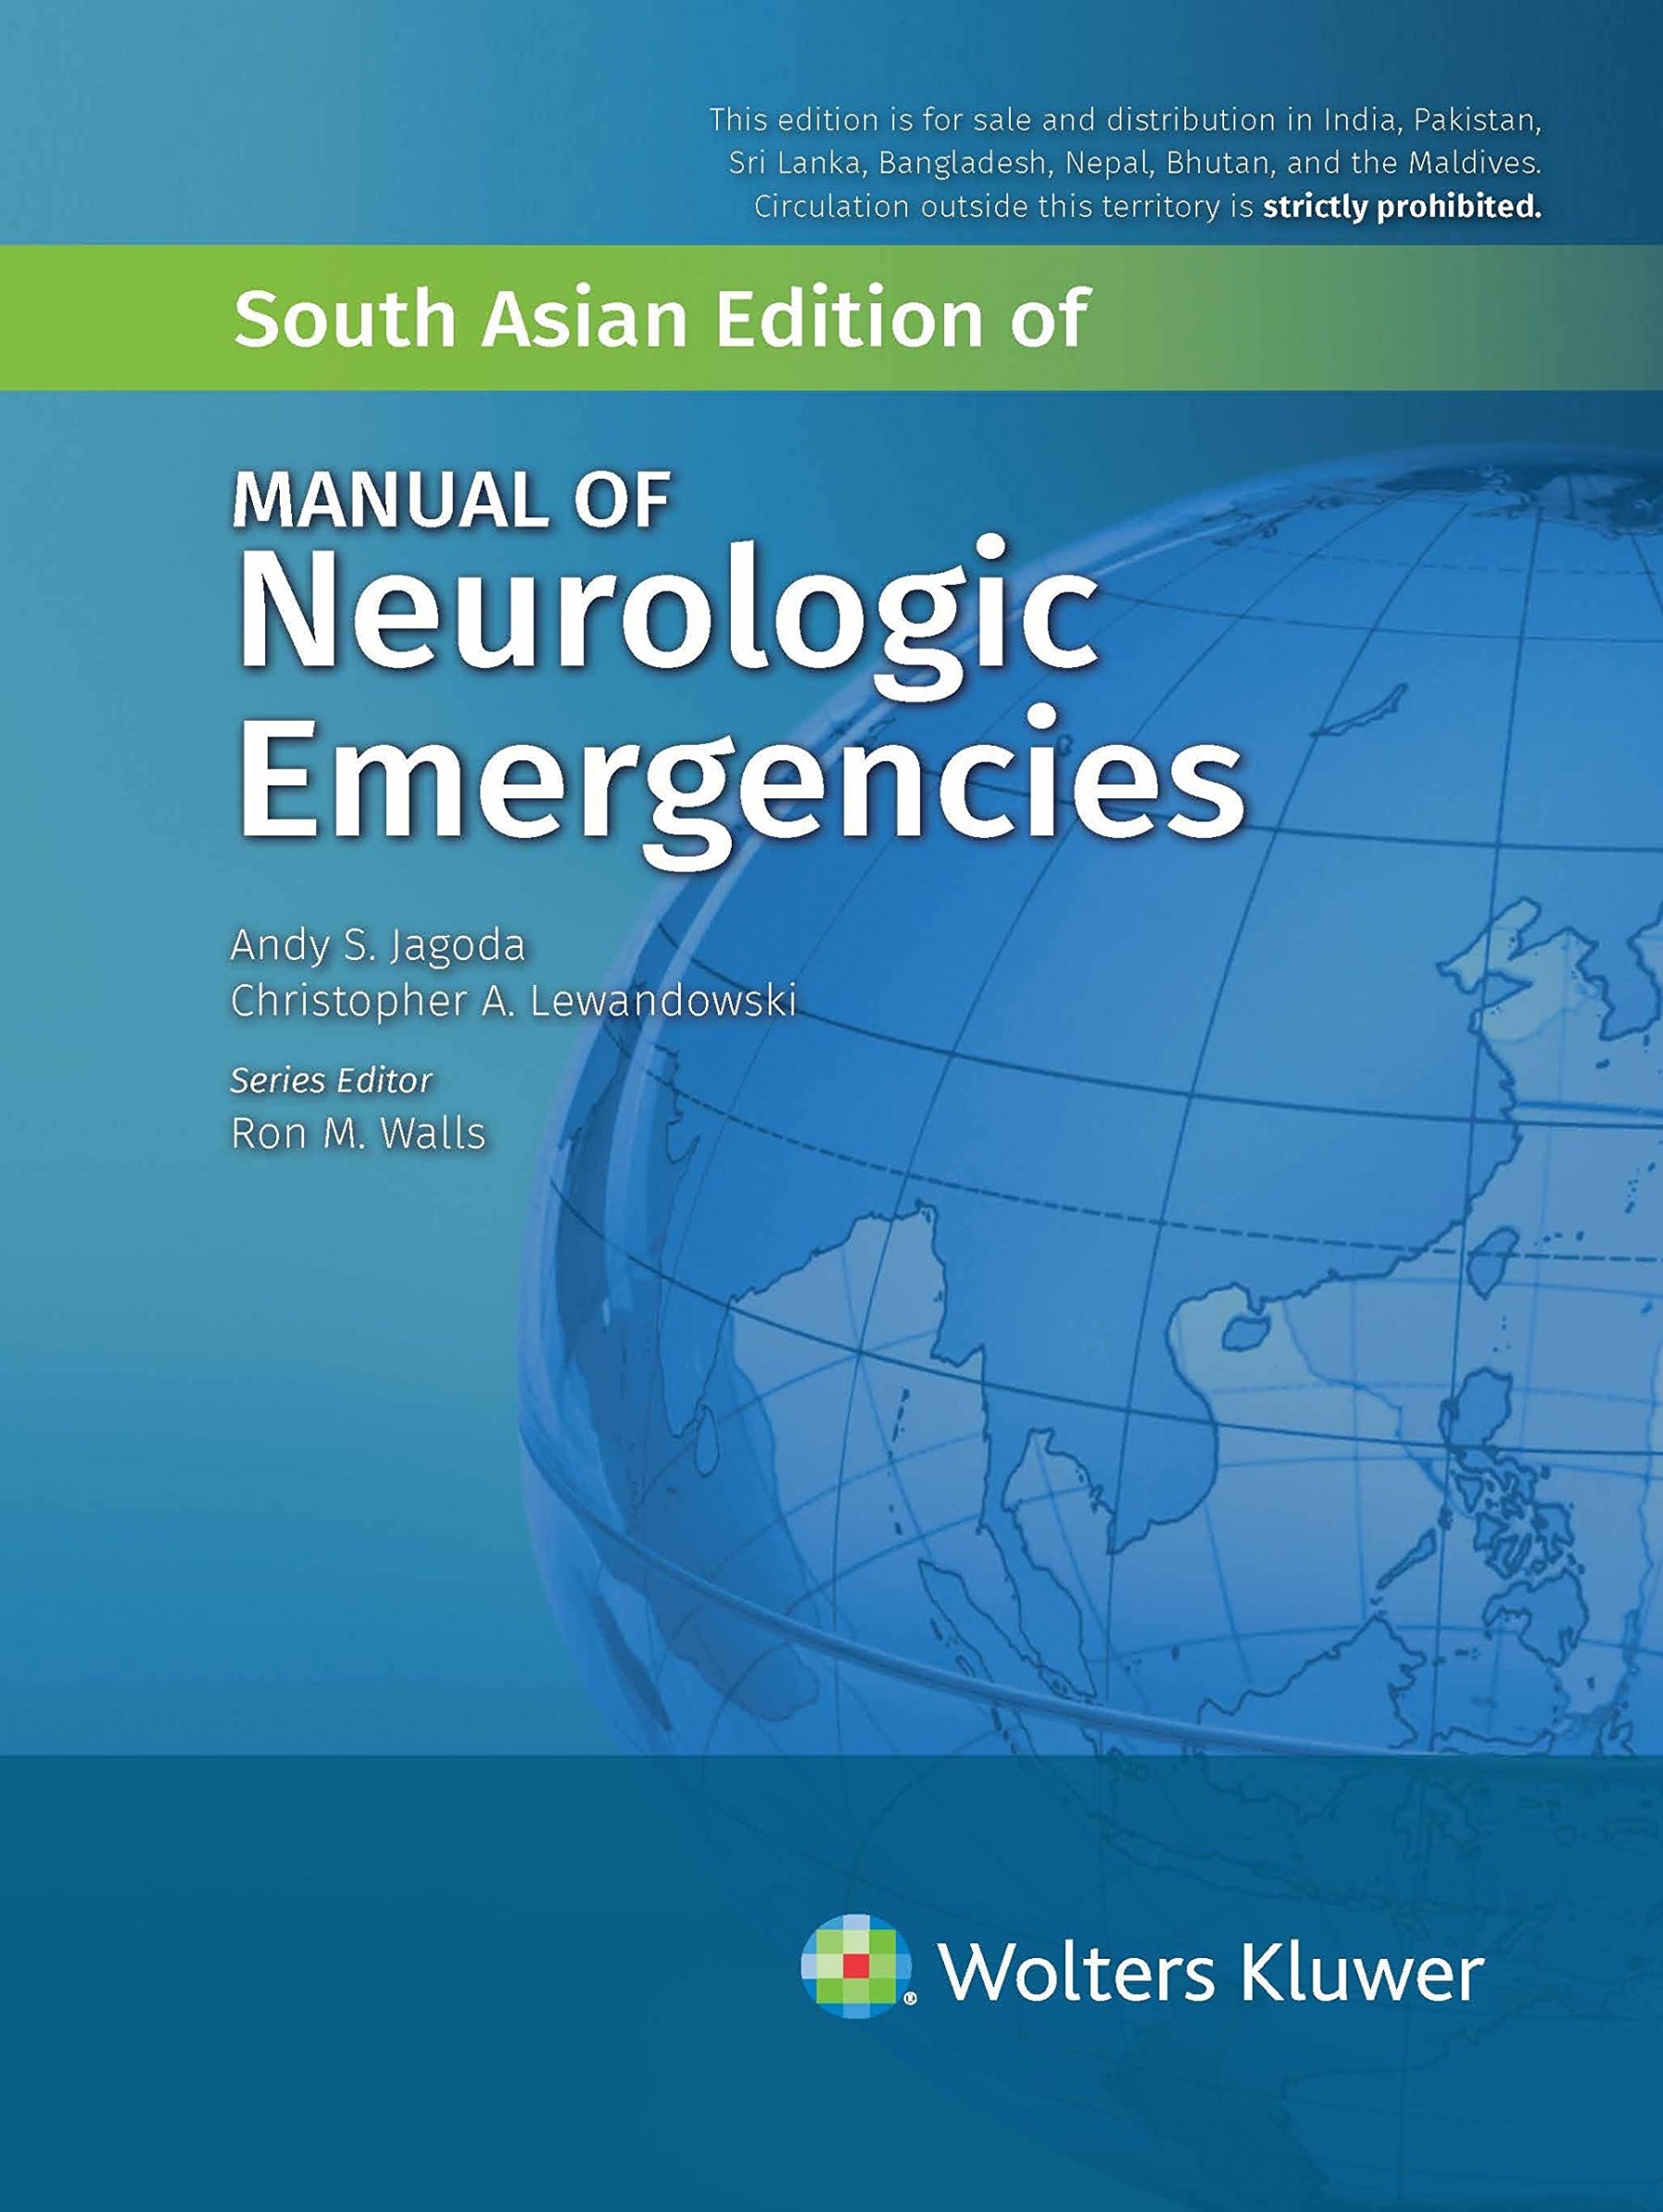 Manual of Neurologic Emergencies (SAE)